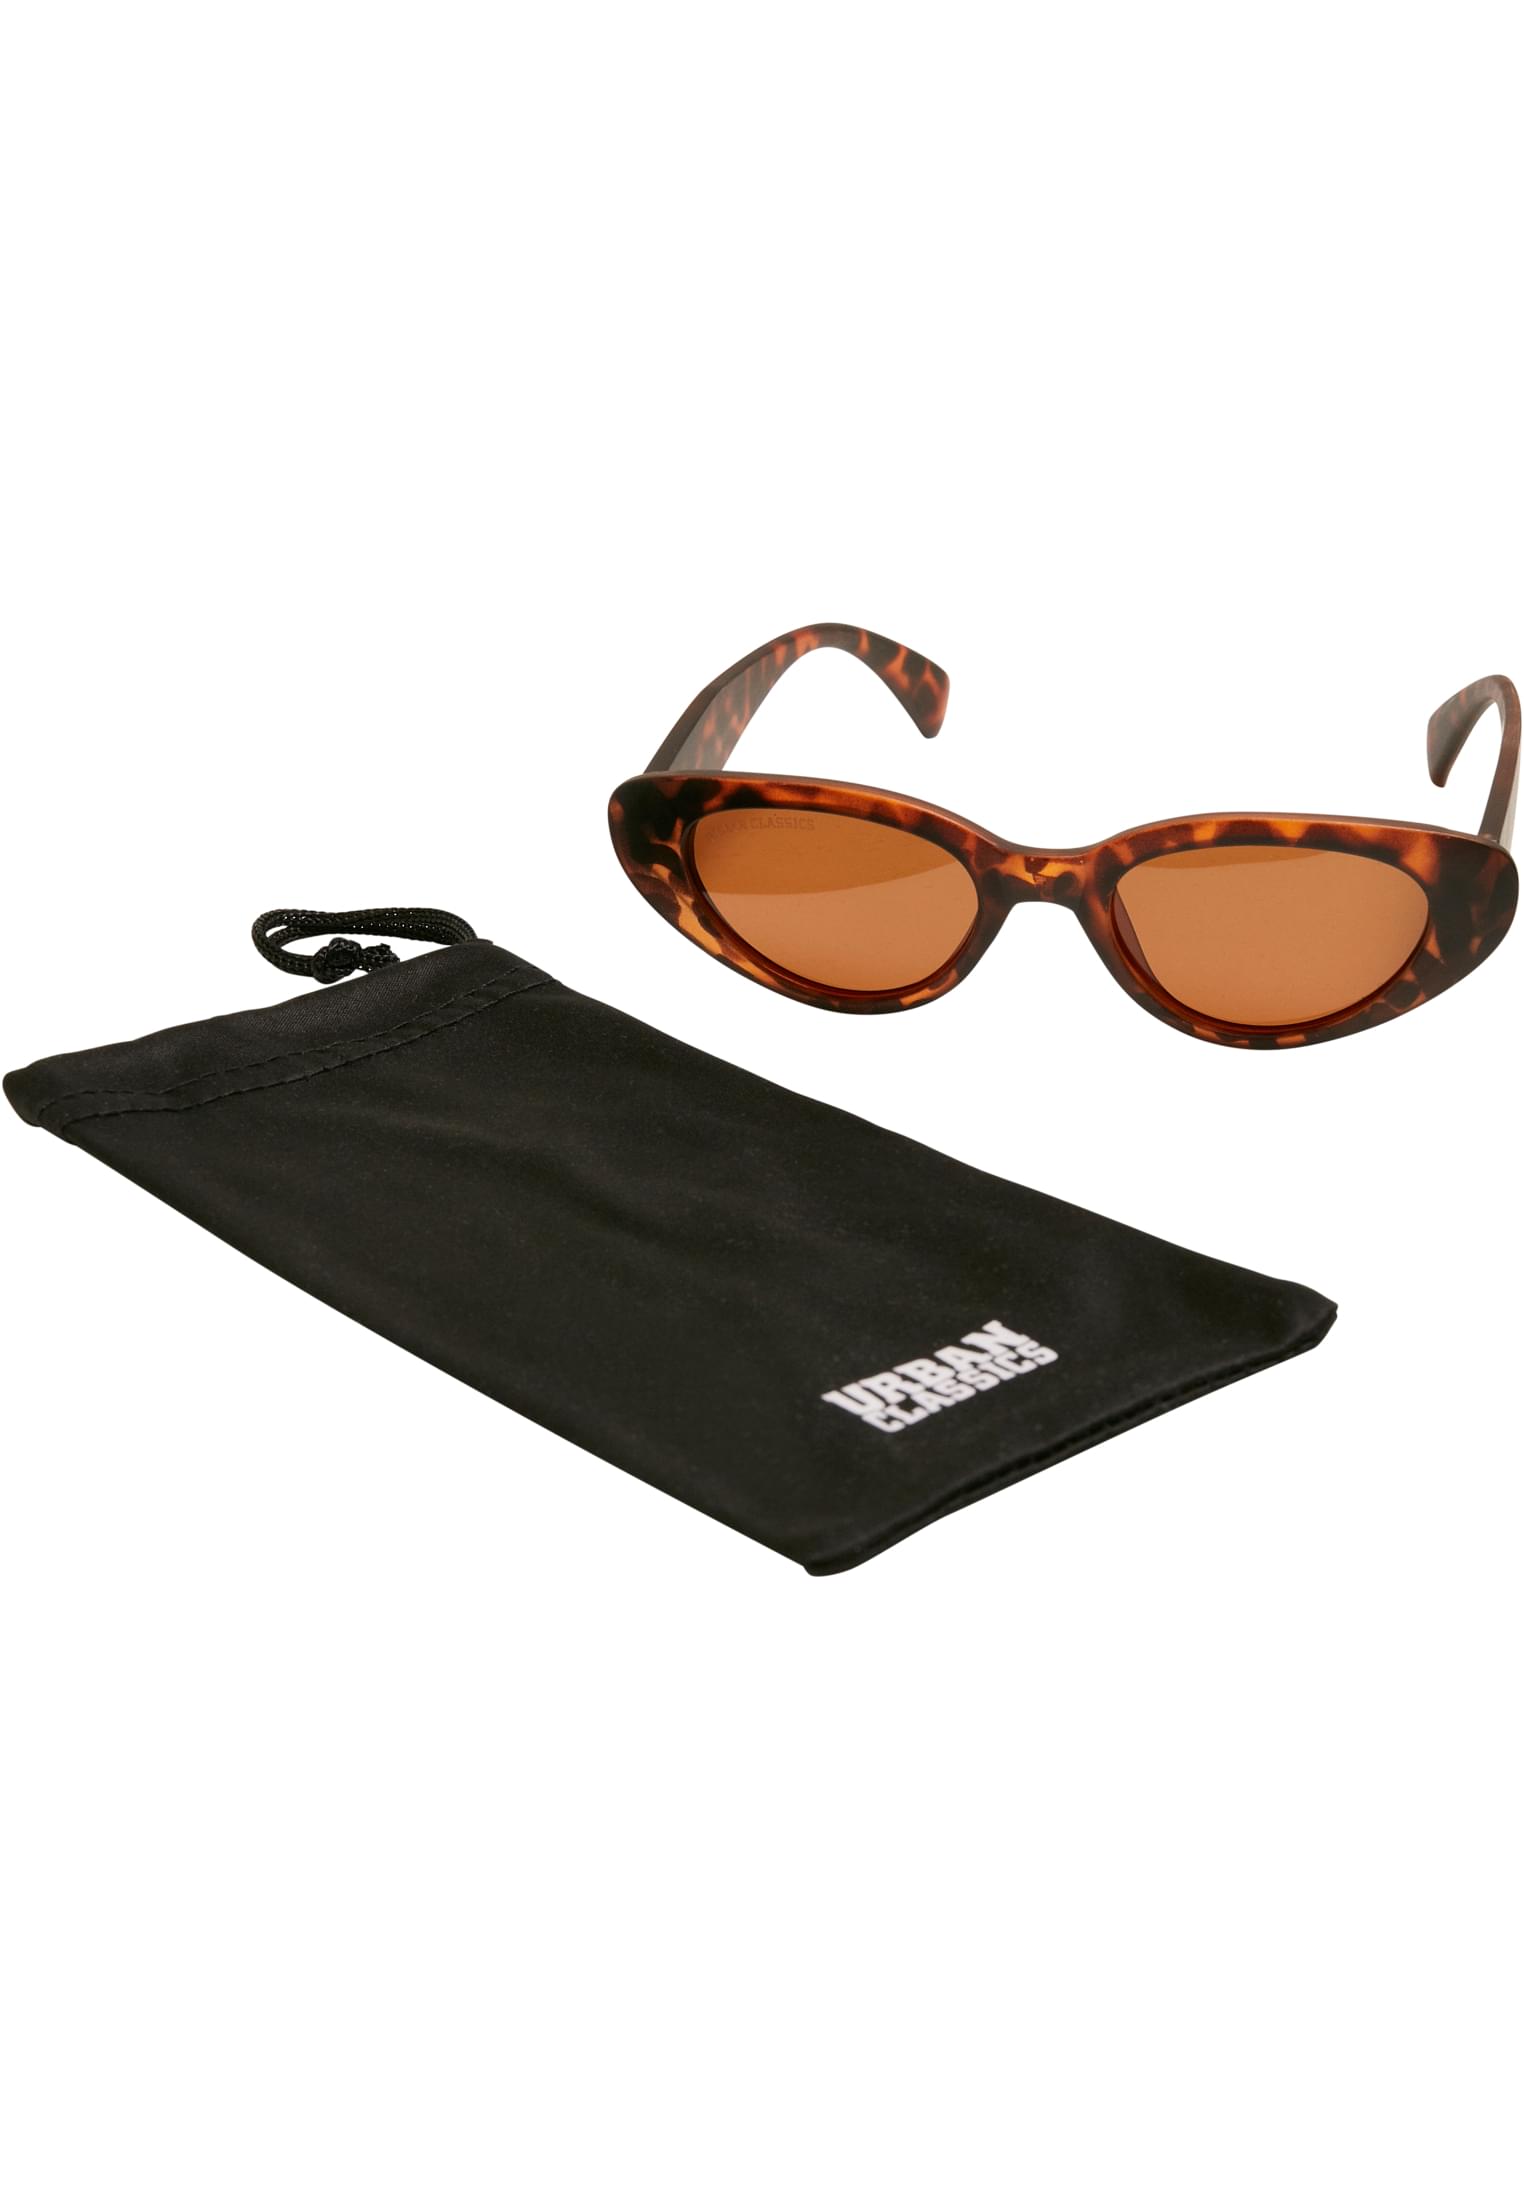 Puerto Rico Chain Sunglasses - Brown